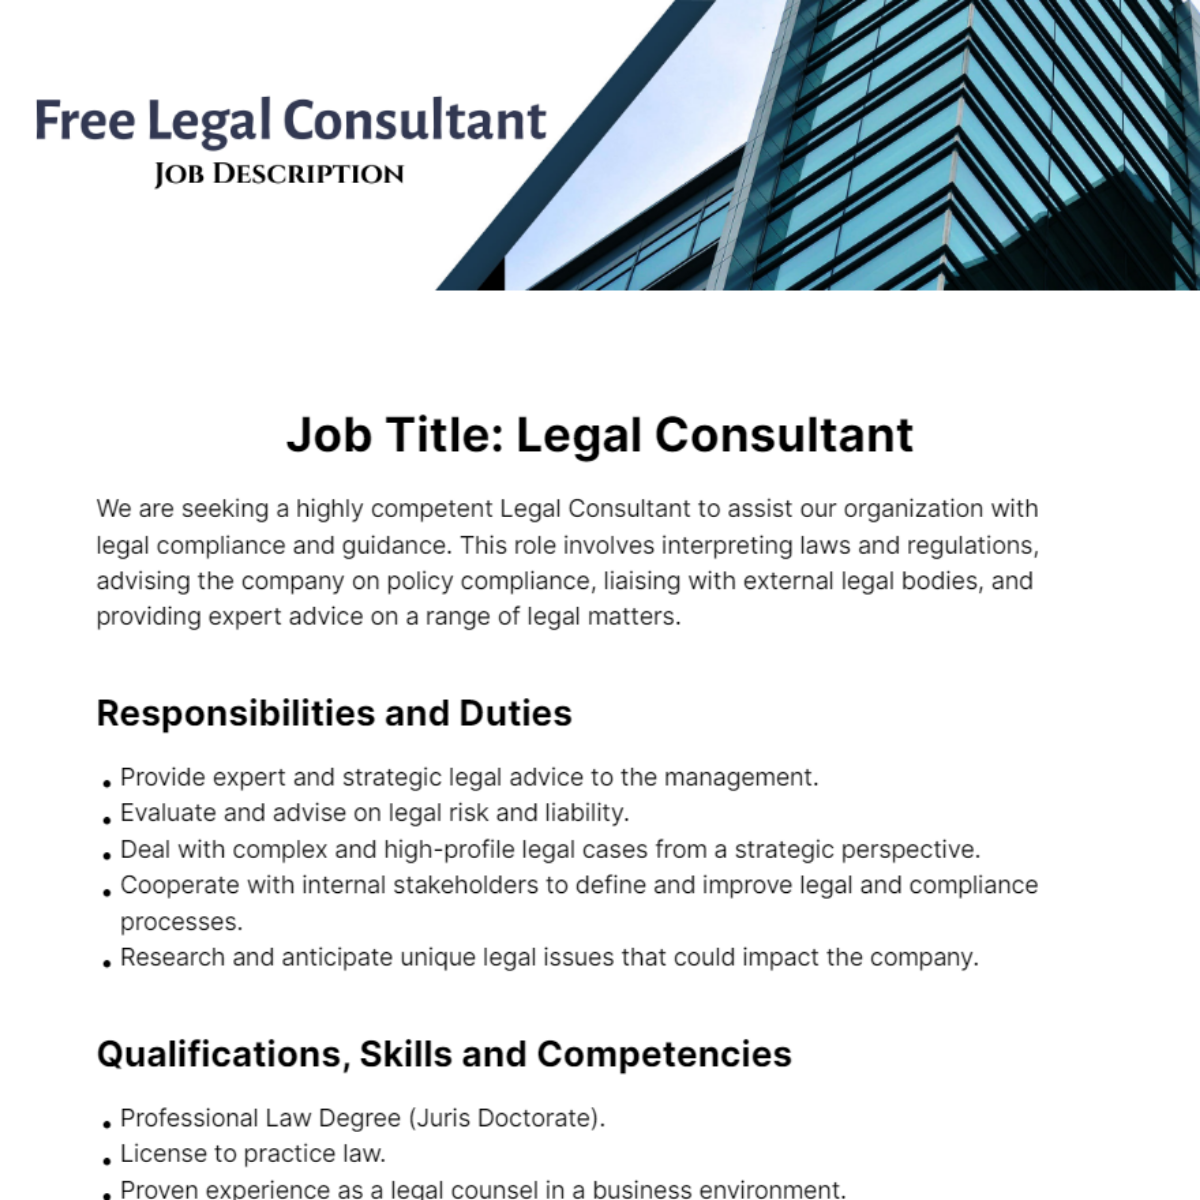 Free Legal Consultant Job Description Template